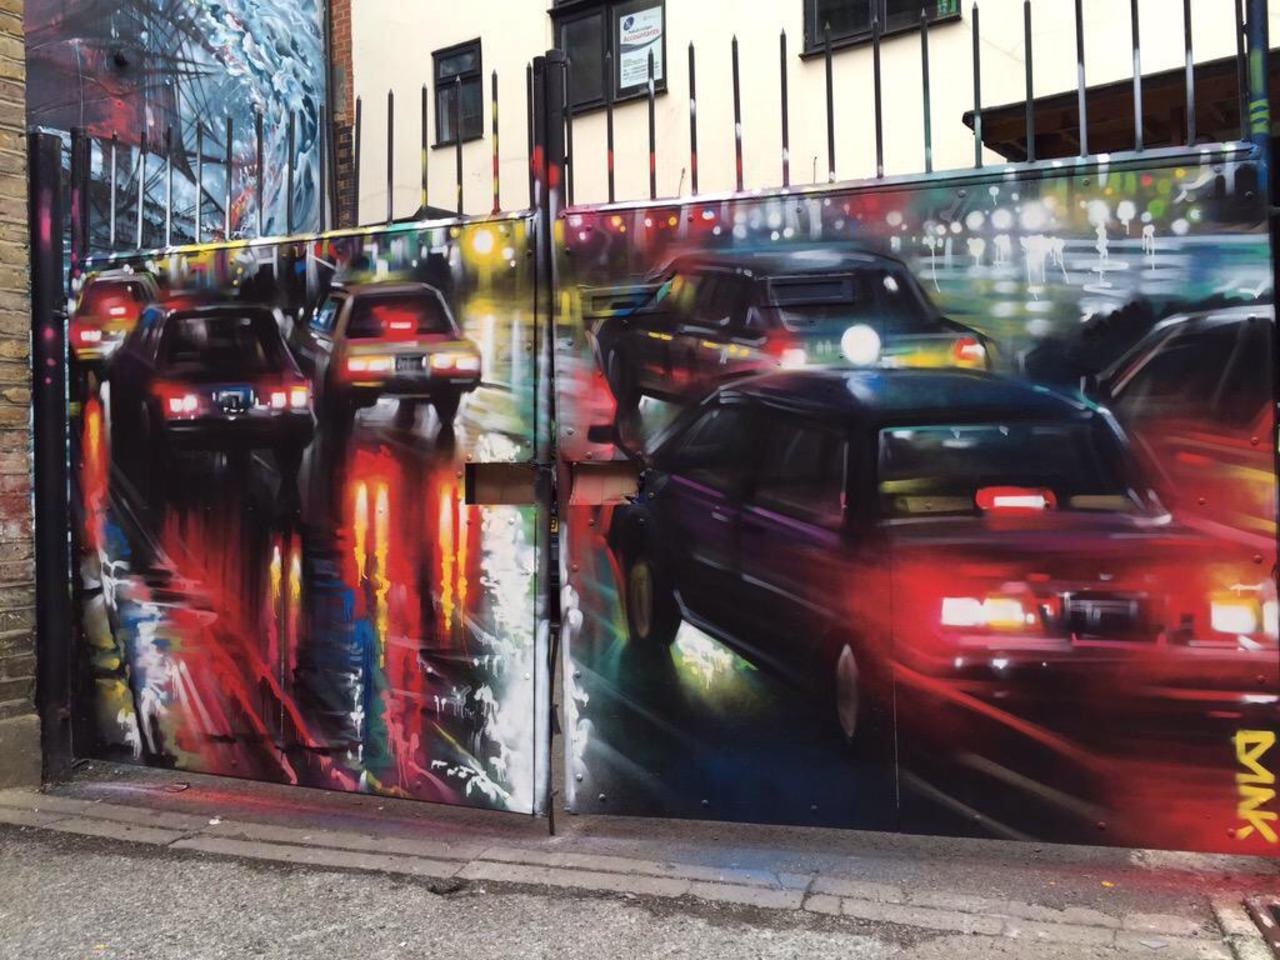 New Street Art by DanKitchener in Brick Lane London 

#art #graffiti #mural #streetart http://t.co/wrAYUqVrV8